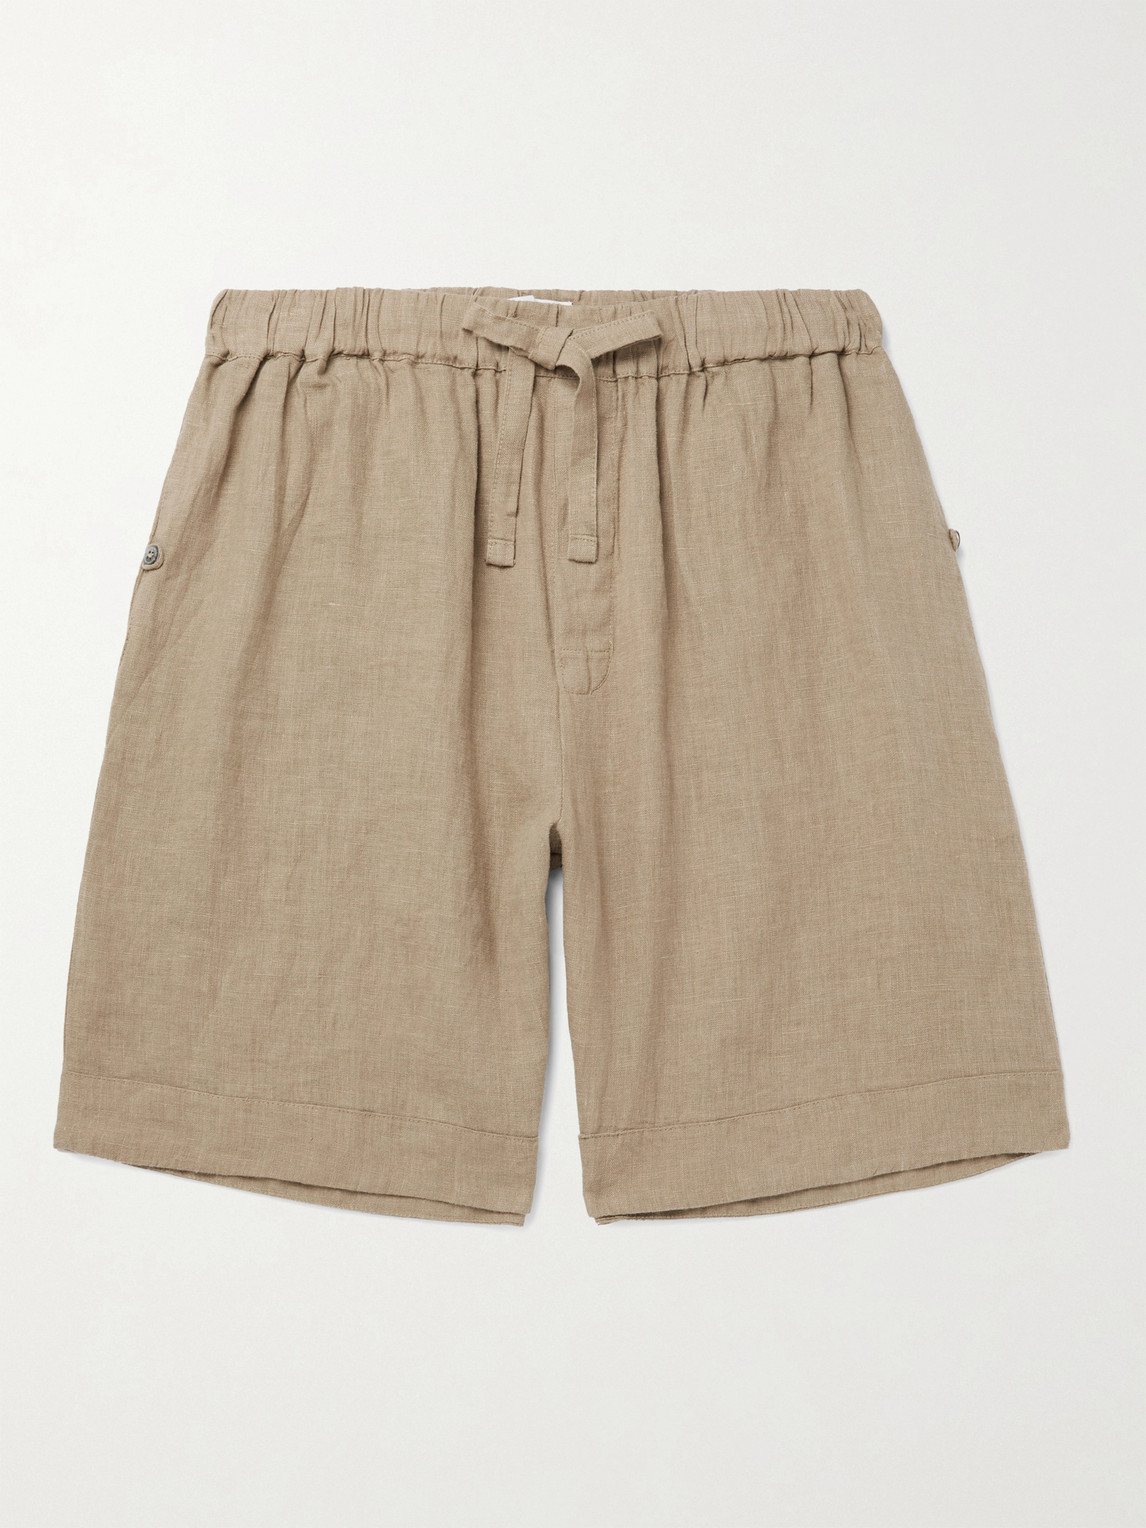 Desmond & Dempsey Linen Drawstring Pyjama Shorts In Brown